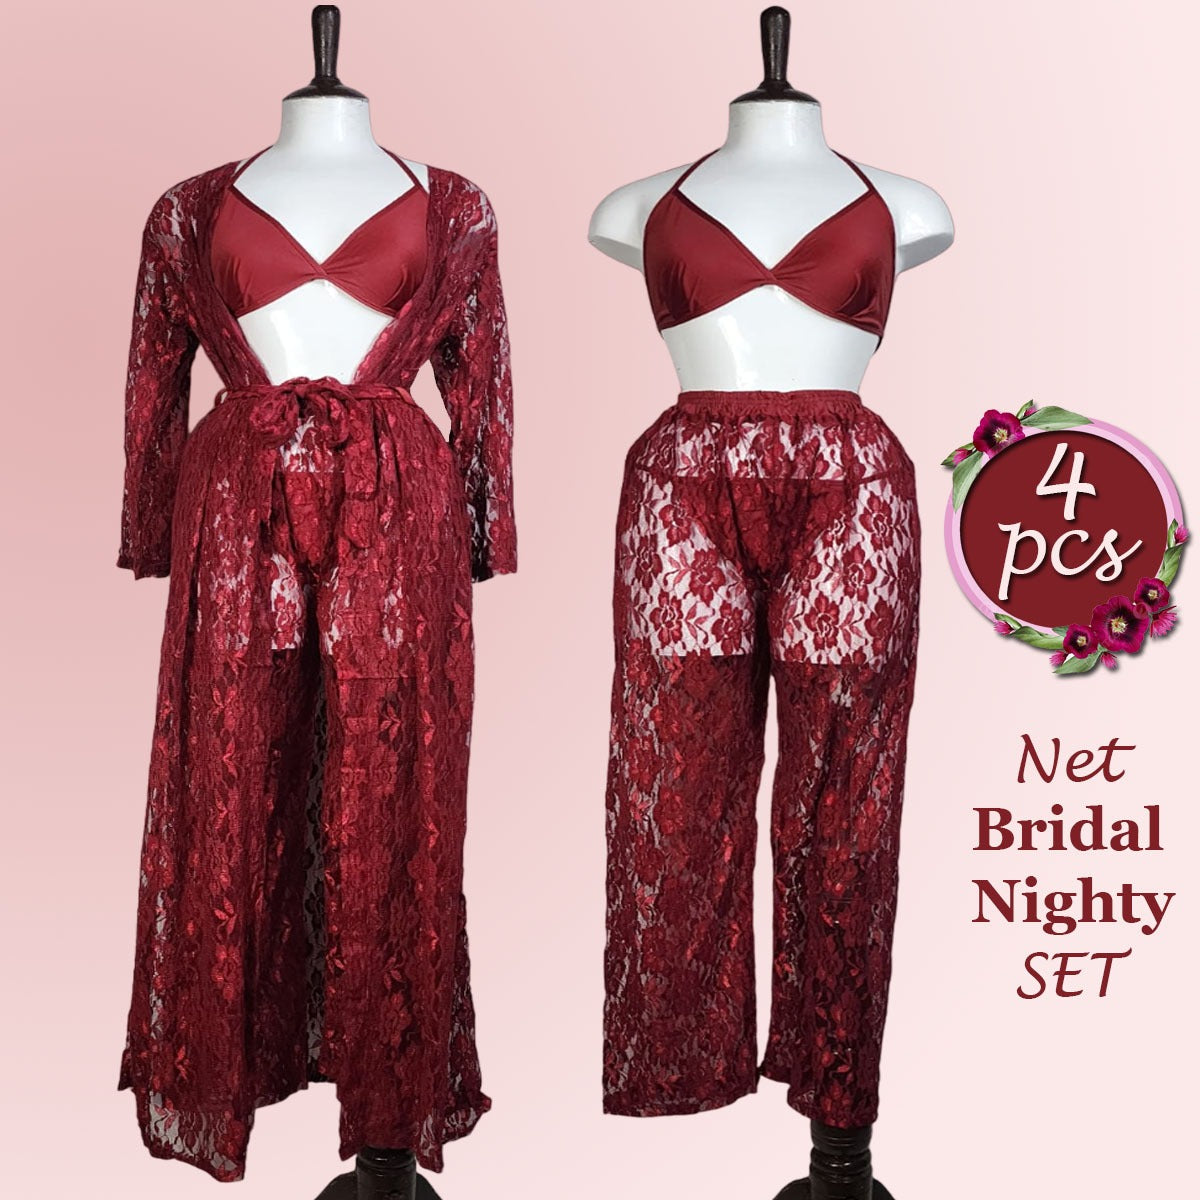 Shezaib 4 pcs High Qaulity Lace Net See Through Bridal Nighty Set